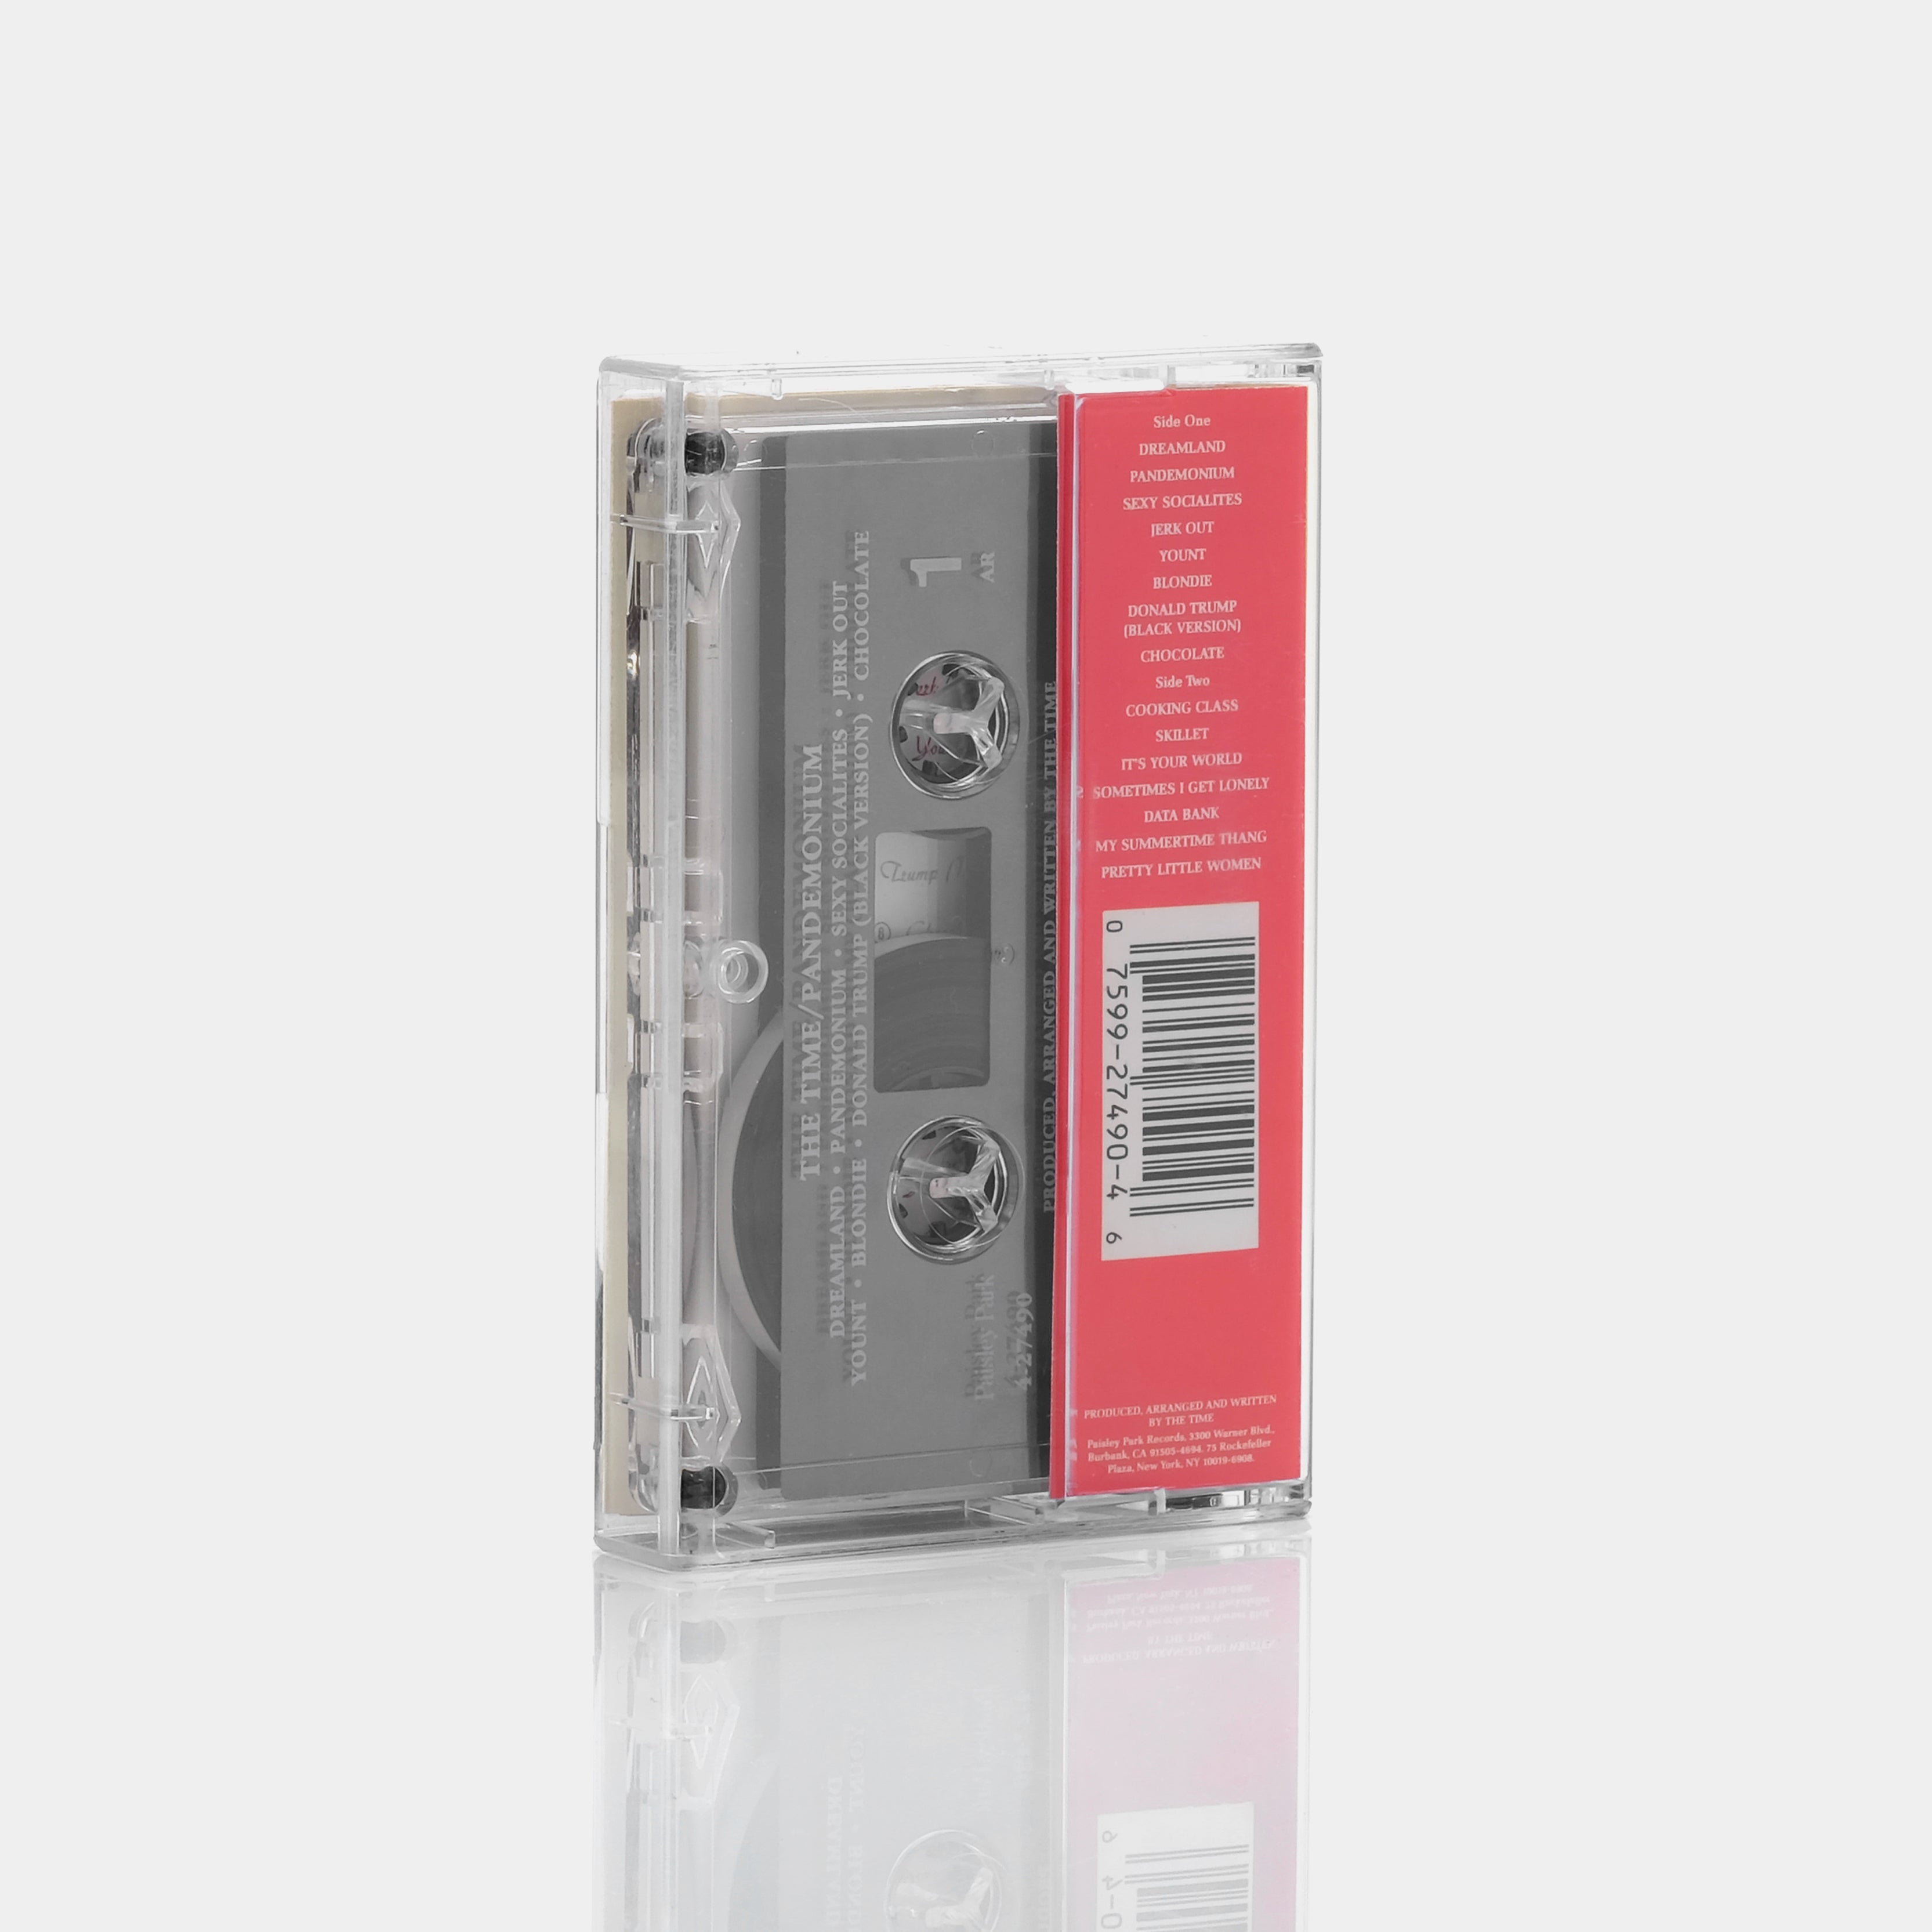 The Time - Pandemonium Cassette Tape